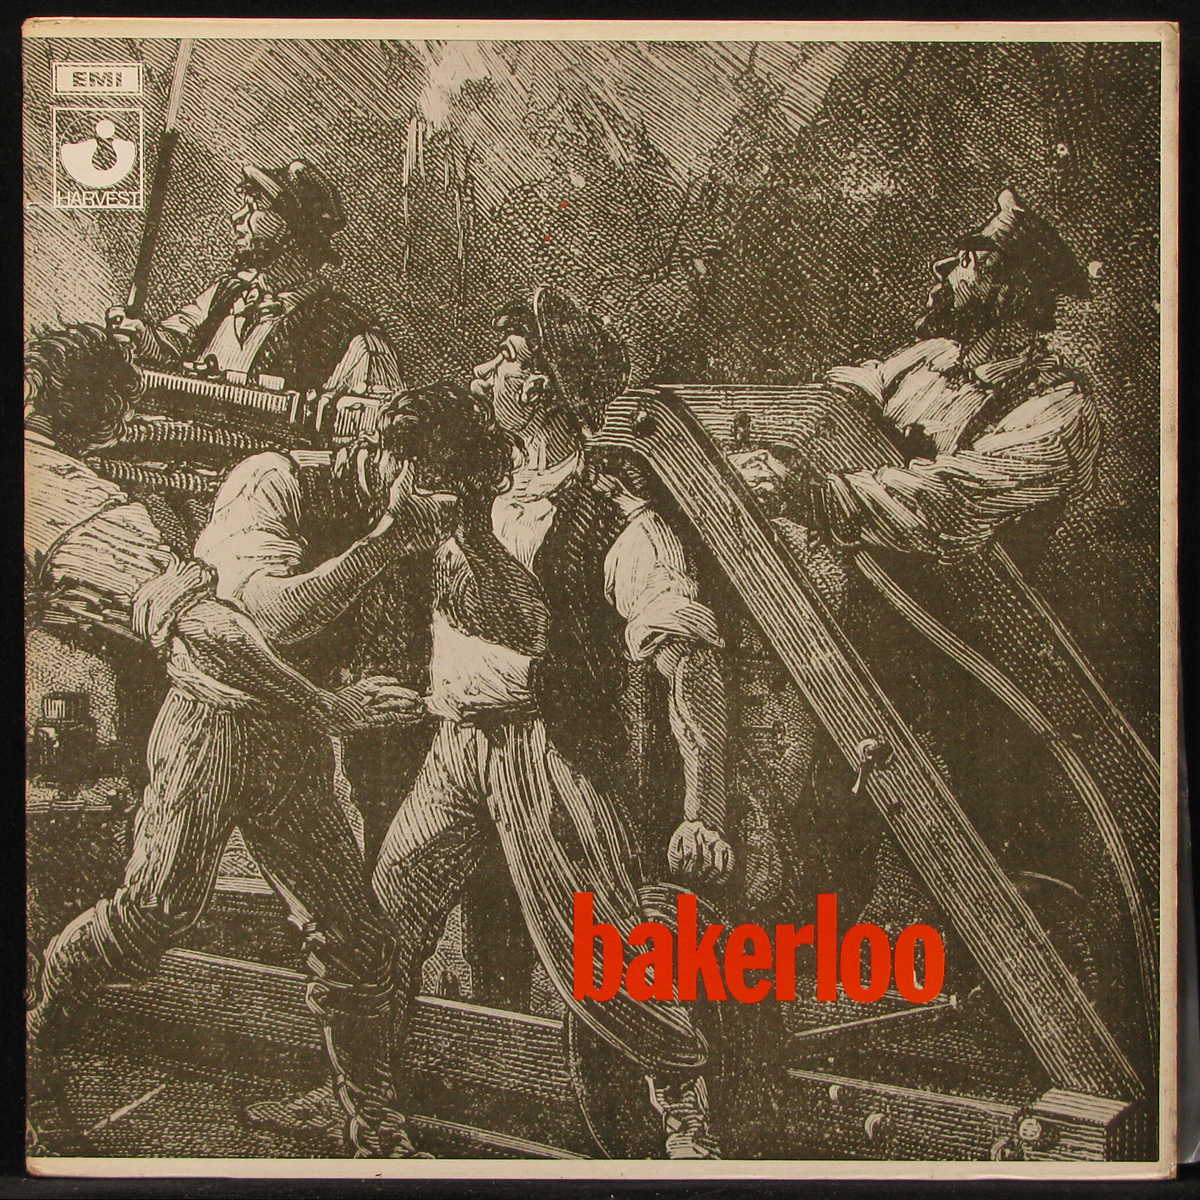 LP Bakerloo — Bakerloo (1969) фото